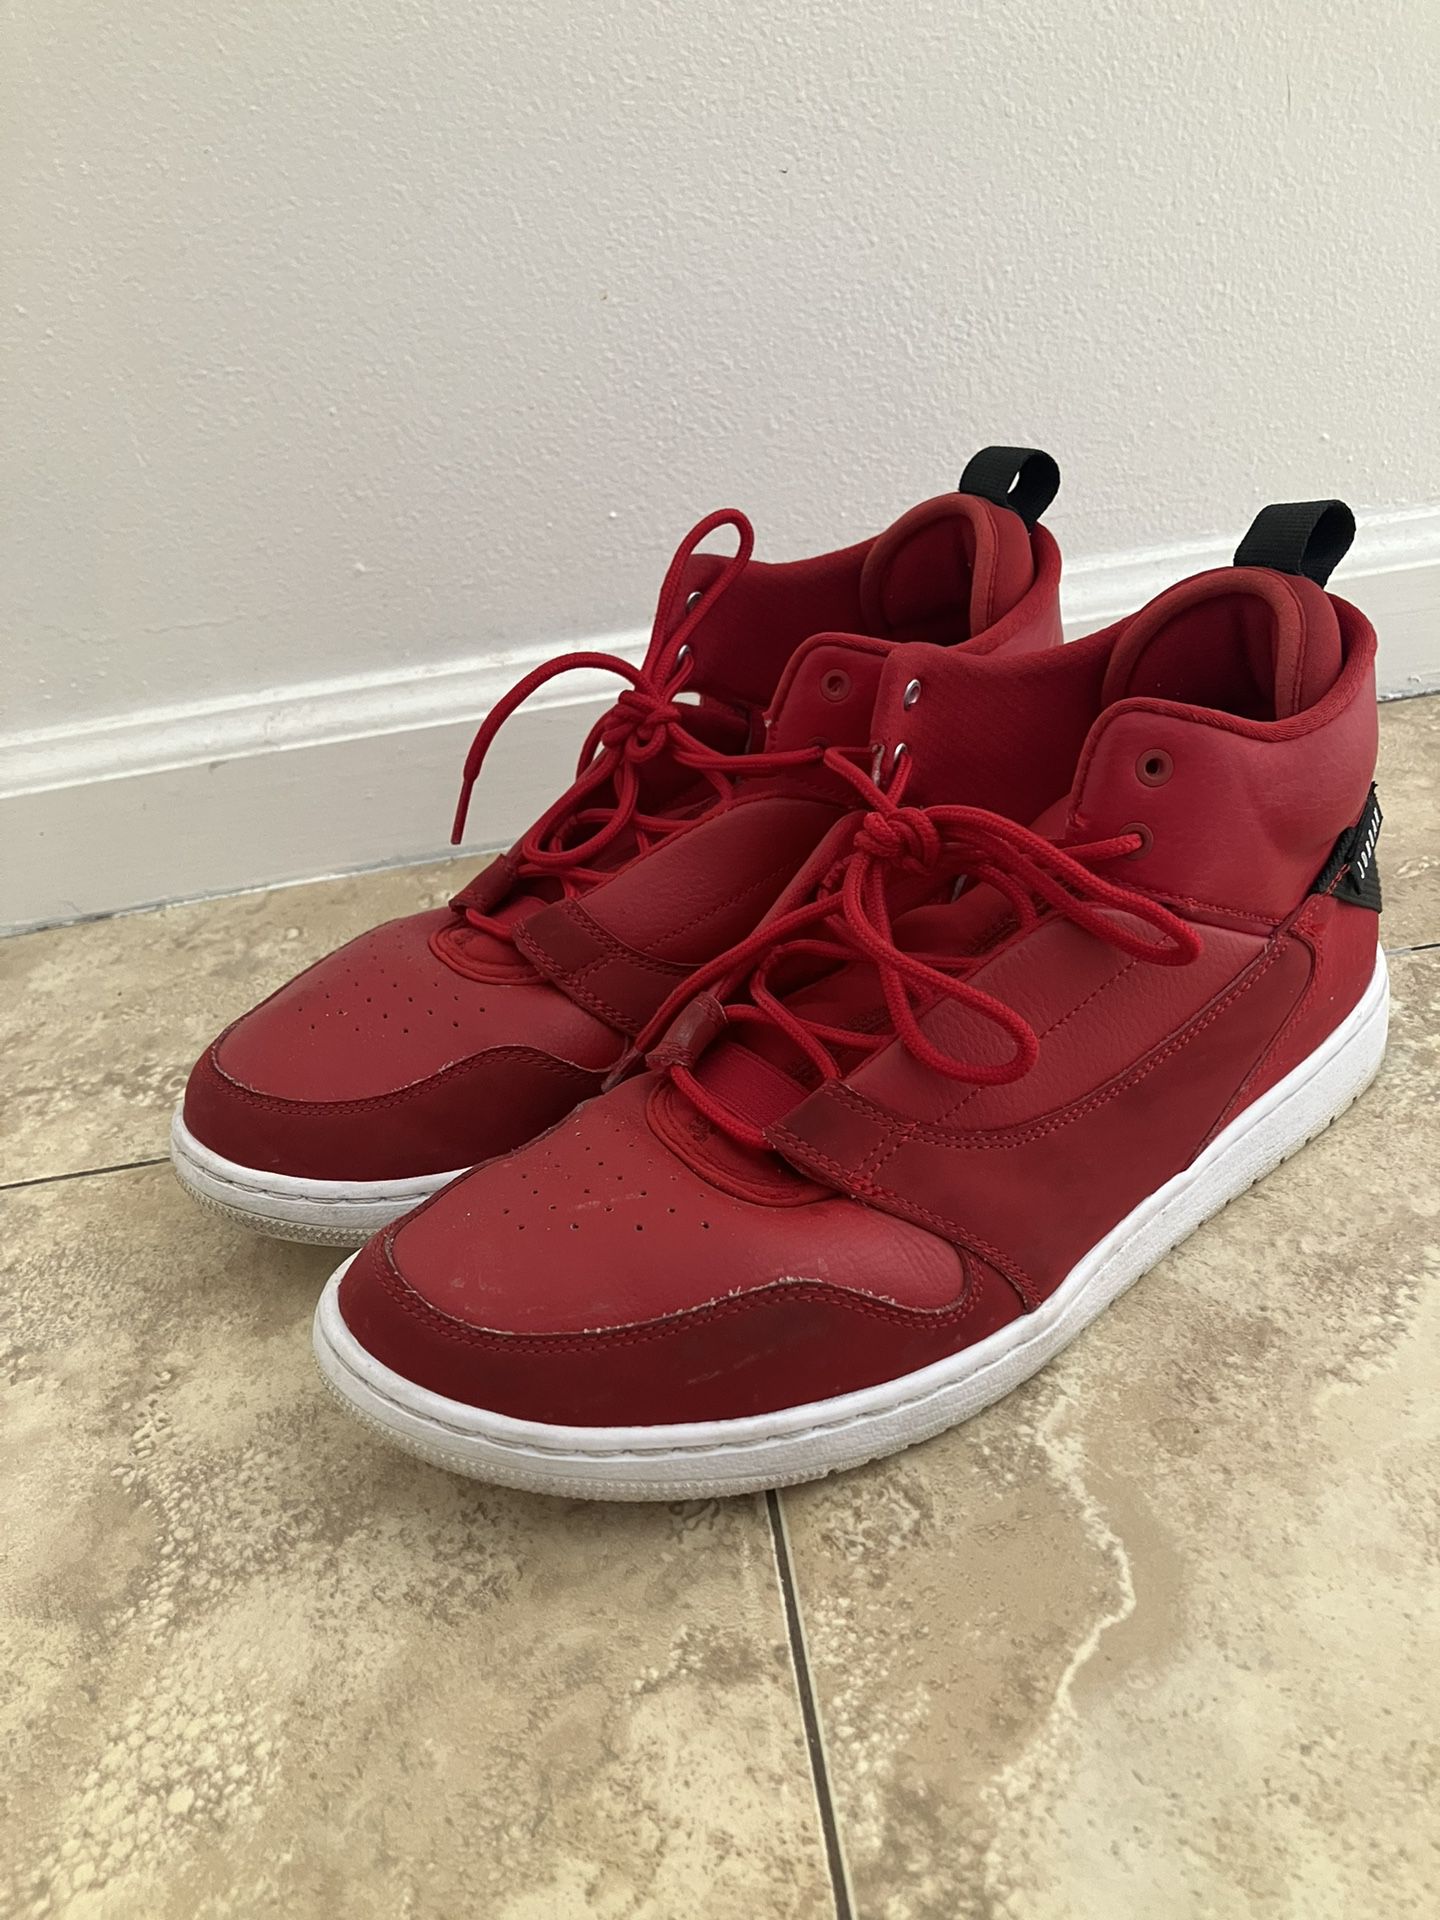 Red Male Nike Style Jordans - Size 11